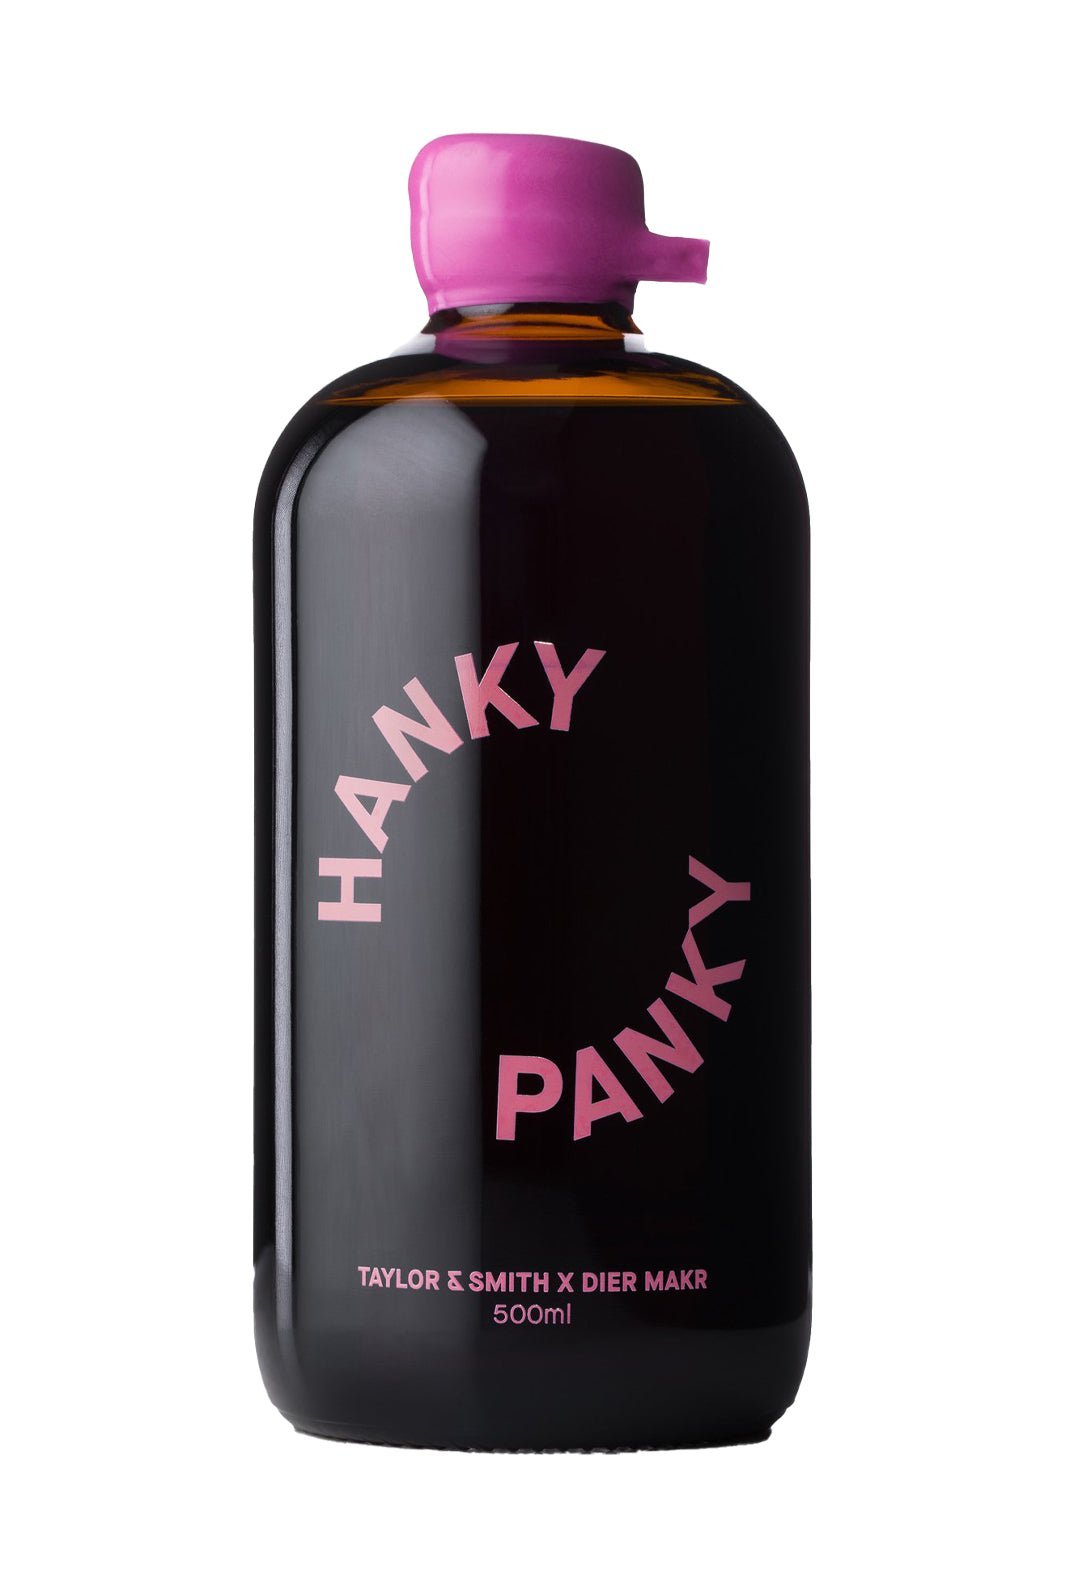 Taylor & Smith Hanky Panky Cocktail 30% 500ml | Liquor & Spirits | Shop online at Spirits of France